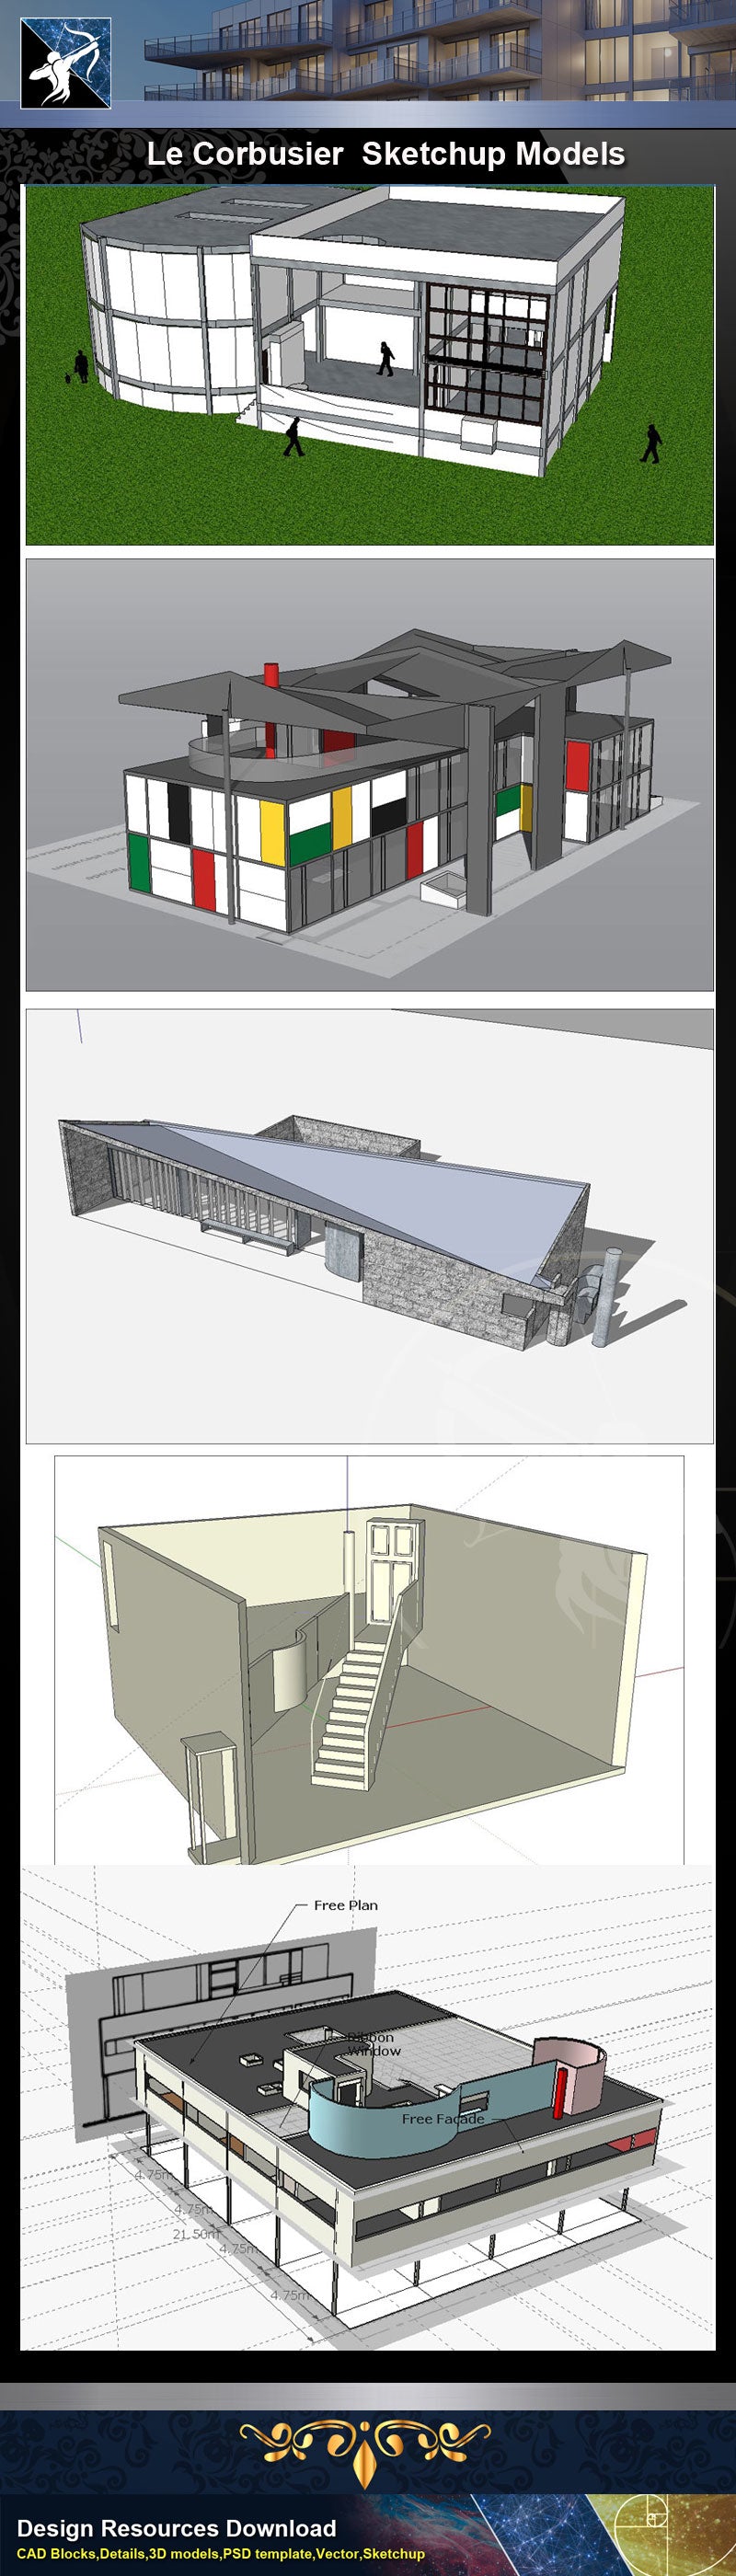 ★Famous Architecture -24 Kinds of Le Corbusier Sketchup 3D Models